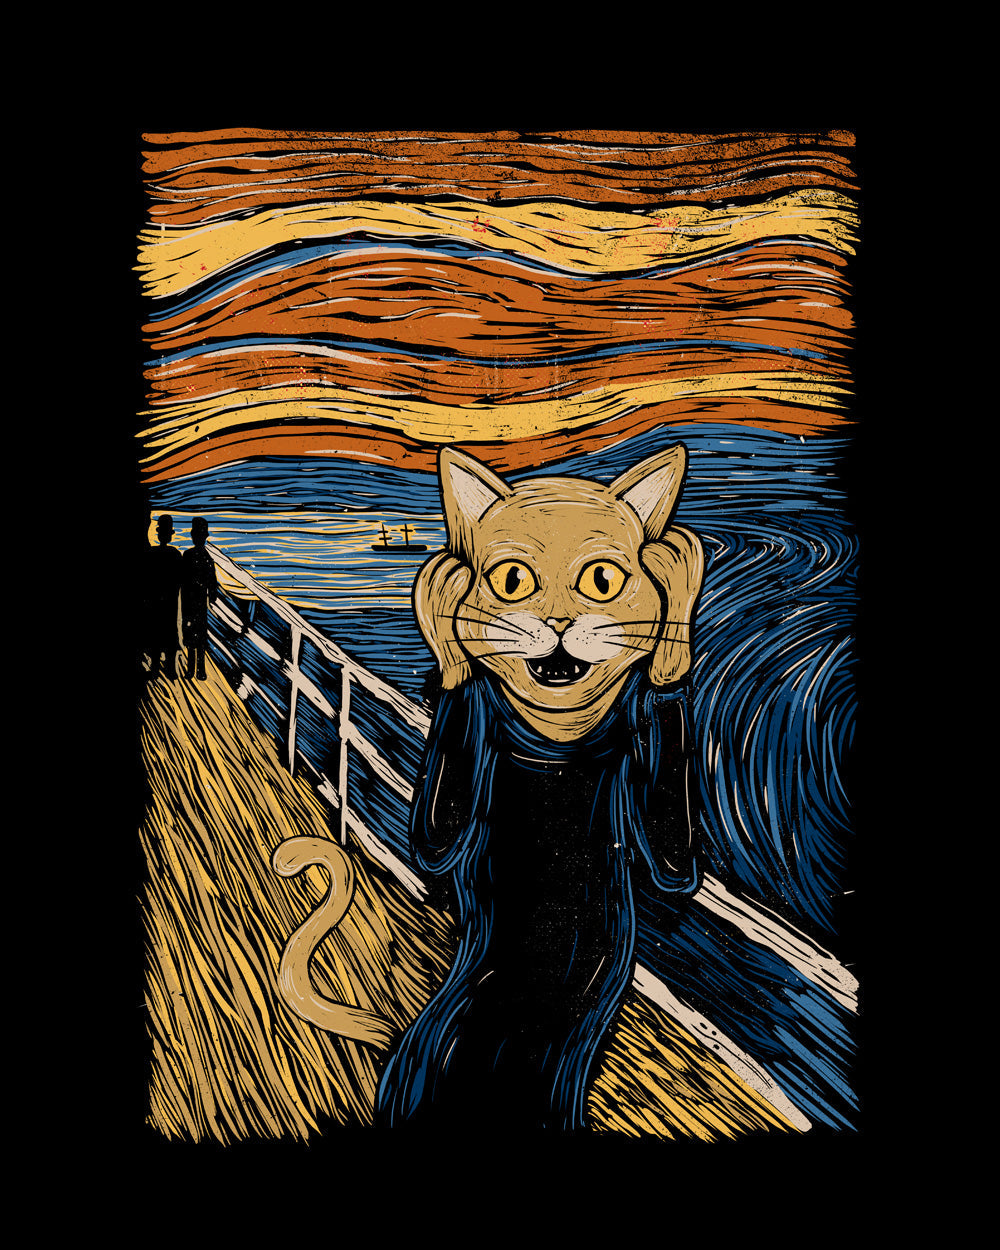 The Purr Funny Cat Kitten Scream Edvard Munch Art Parody Artsy Animal Painting Cotton T-Shirt